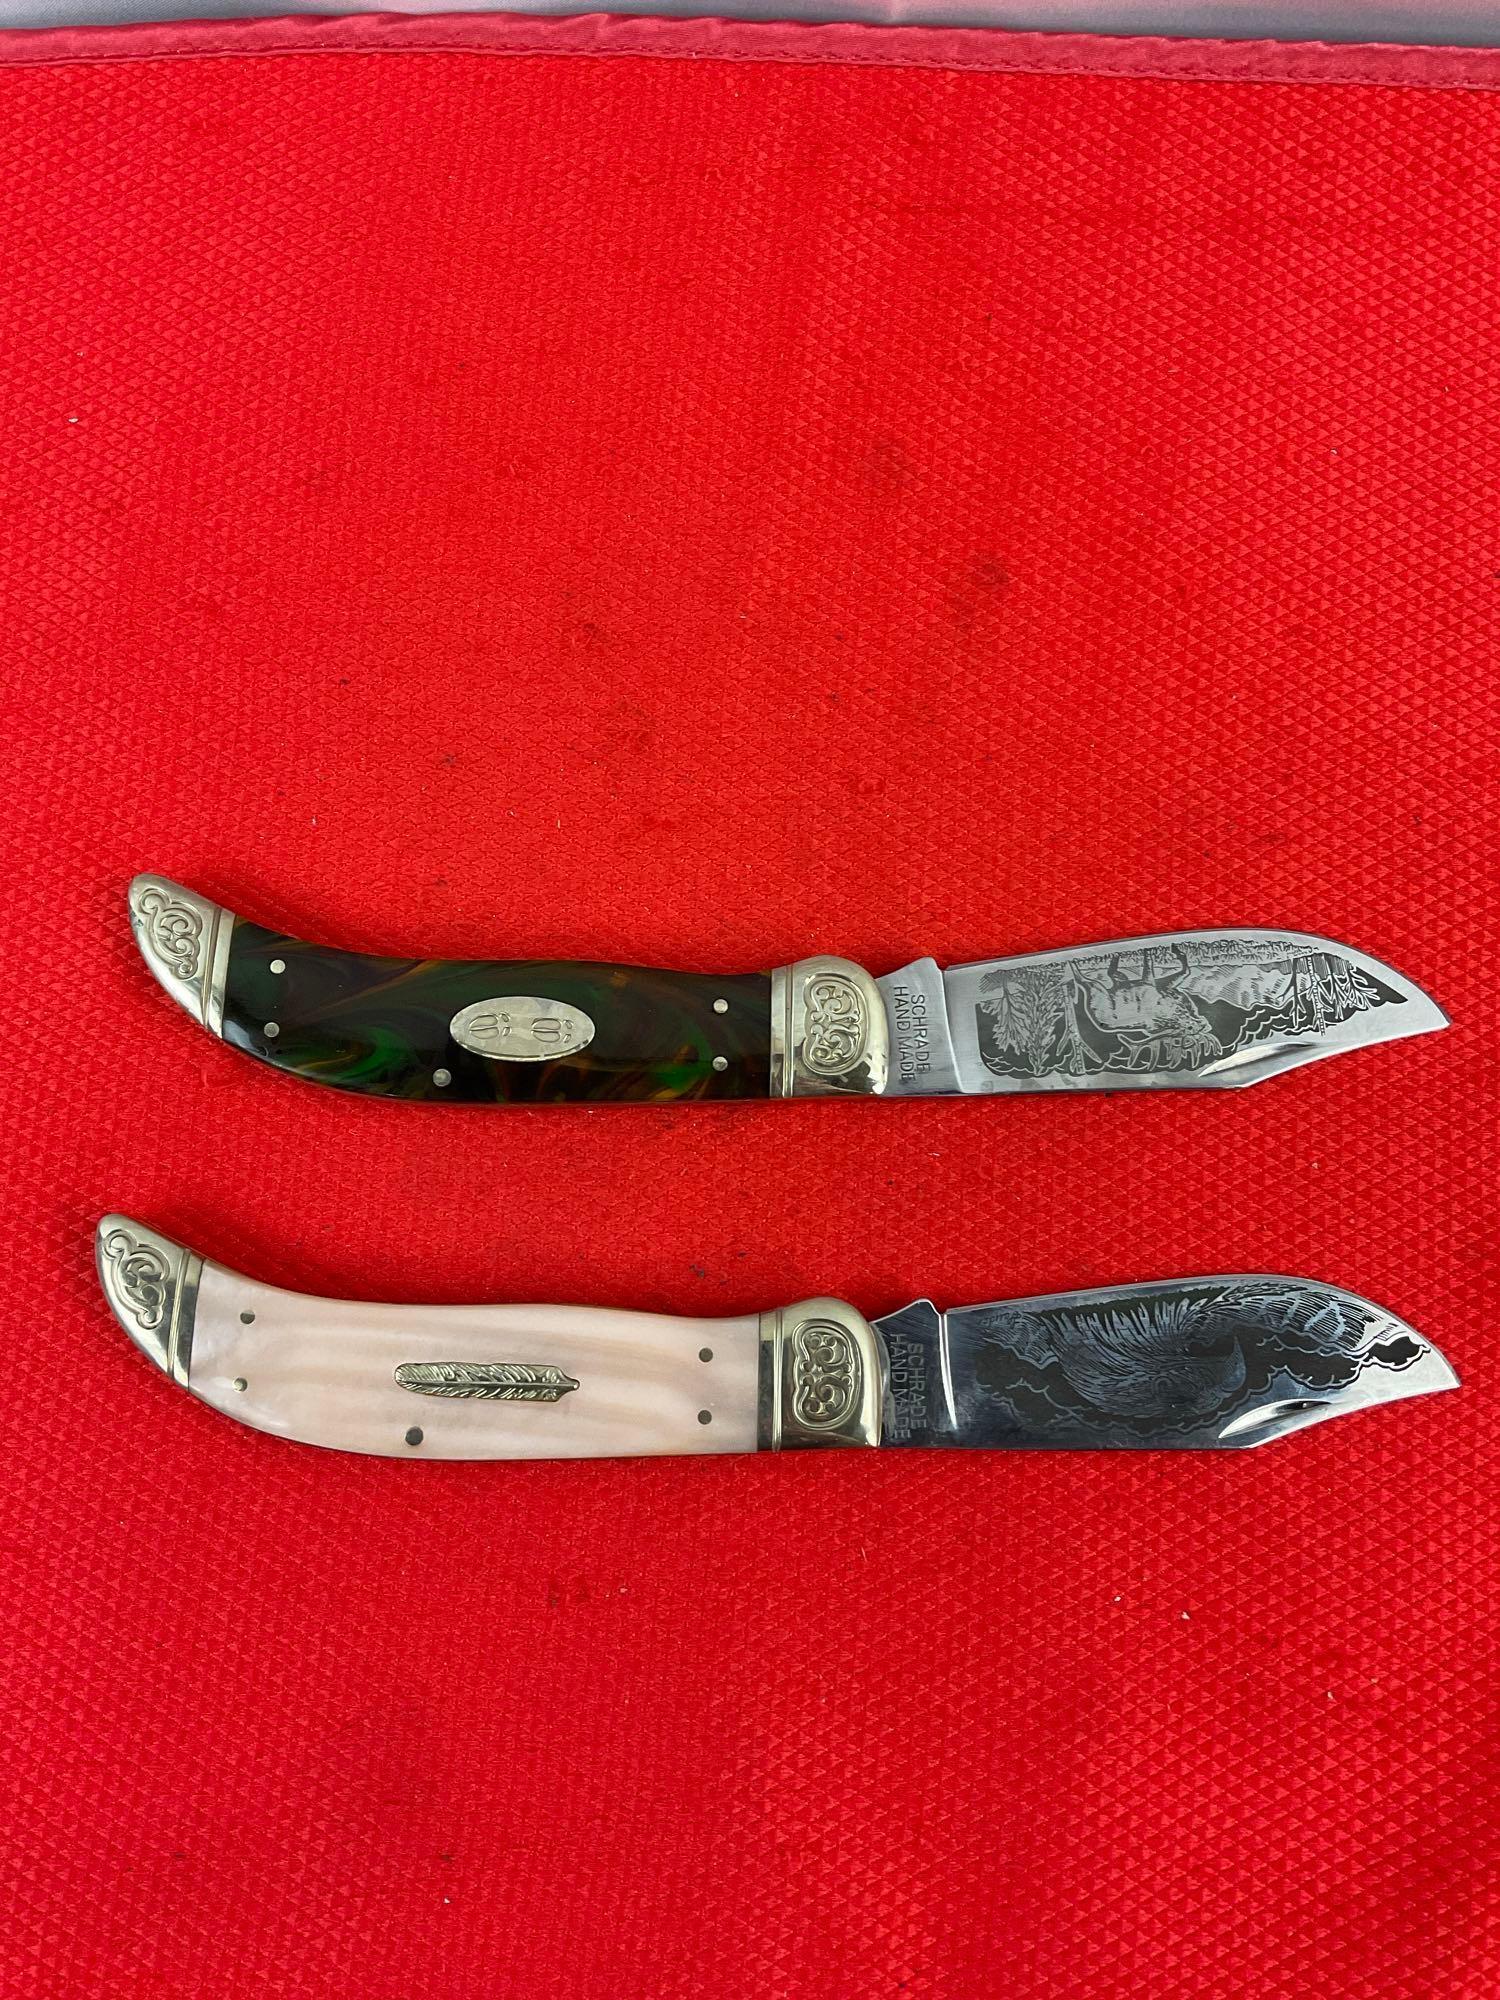 2 pcs Schrade Collectible Folding Blade Pocket Hunting Knives in Boxes. Ltd Ed 2007 & 2008. NIB. ...